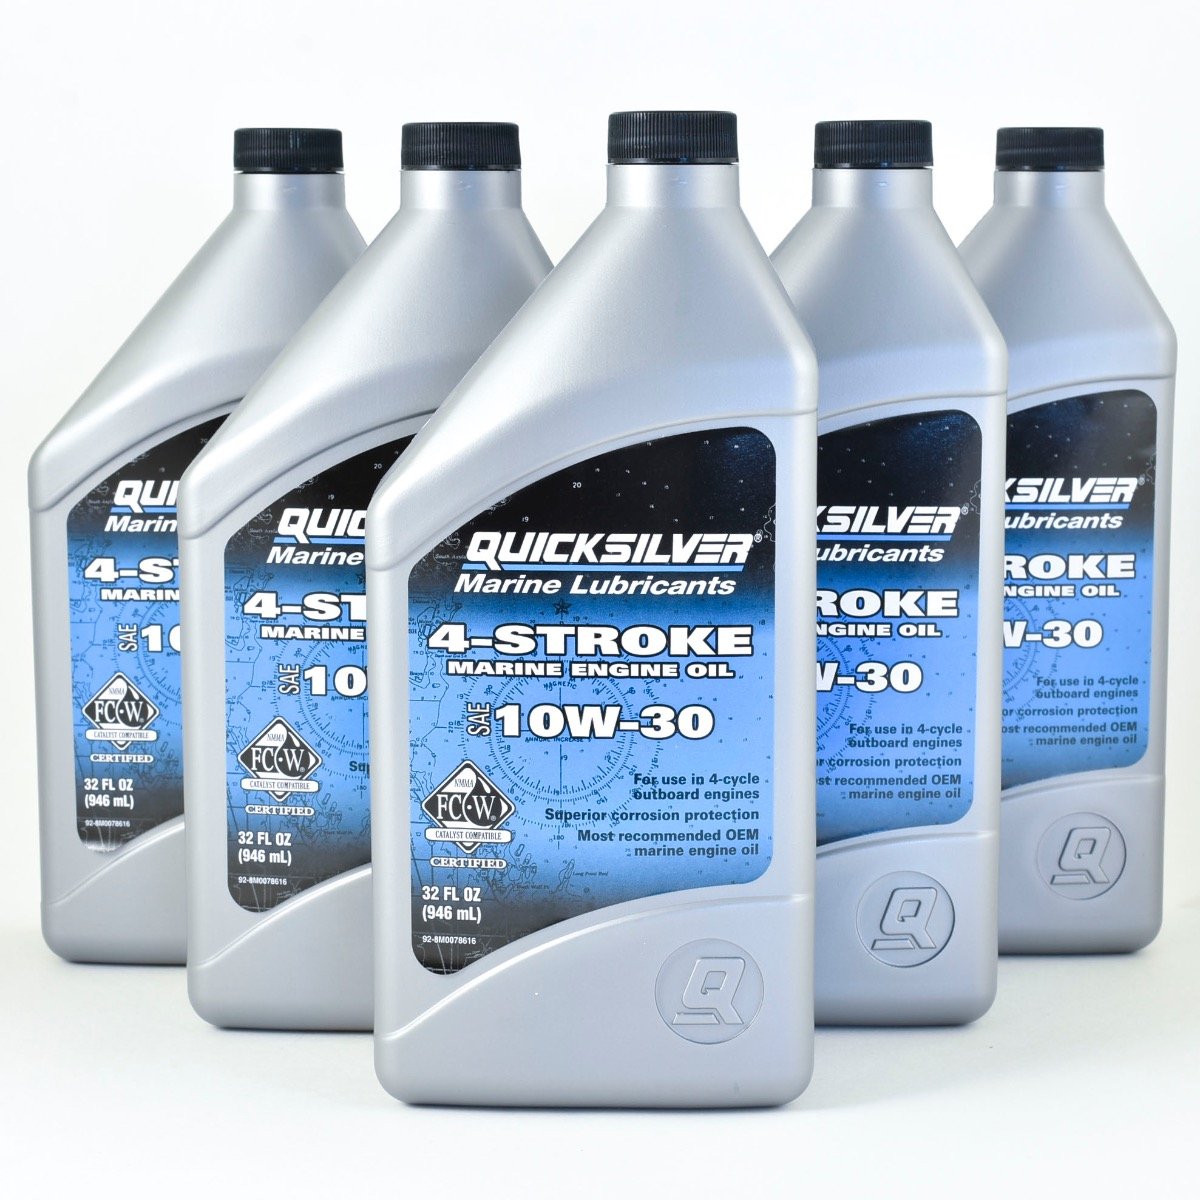 Quicksilver 4"‘Stroke 10W30 Marine Engine Oil - Quart - 92-8M0078616 - 6 Pack